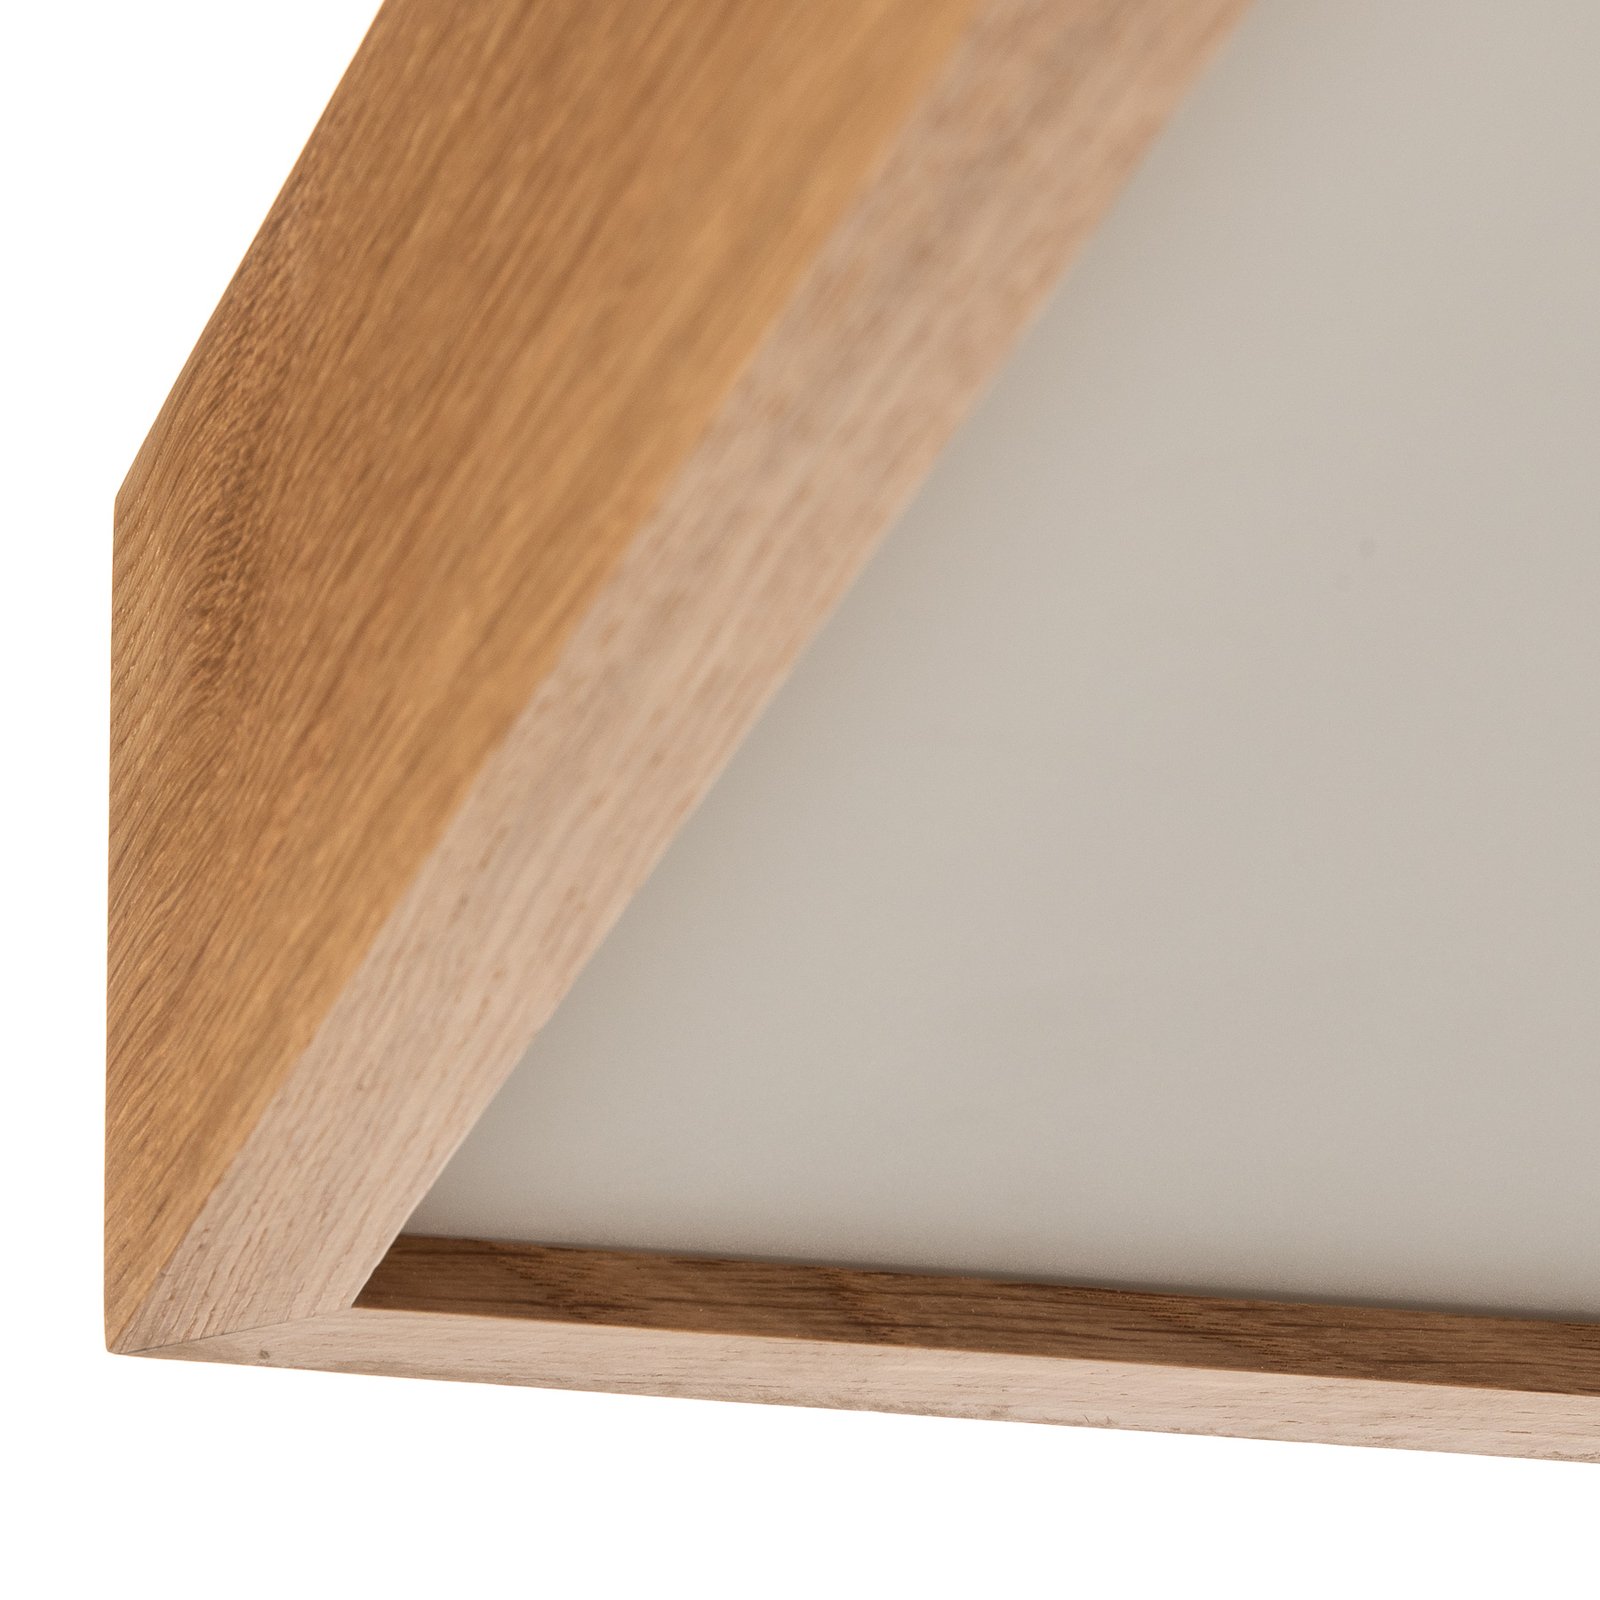 Quatro DR ceiling light with wooden frame, 38.5 cm